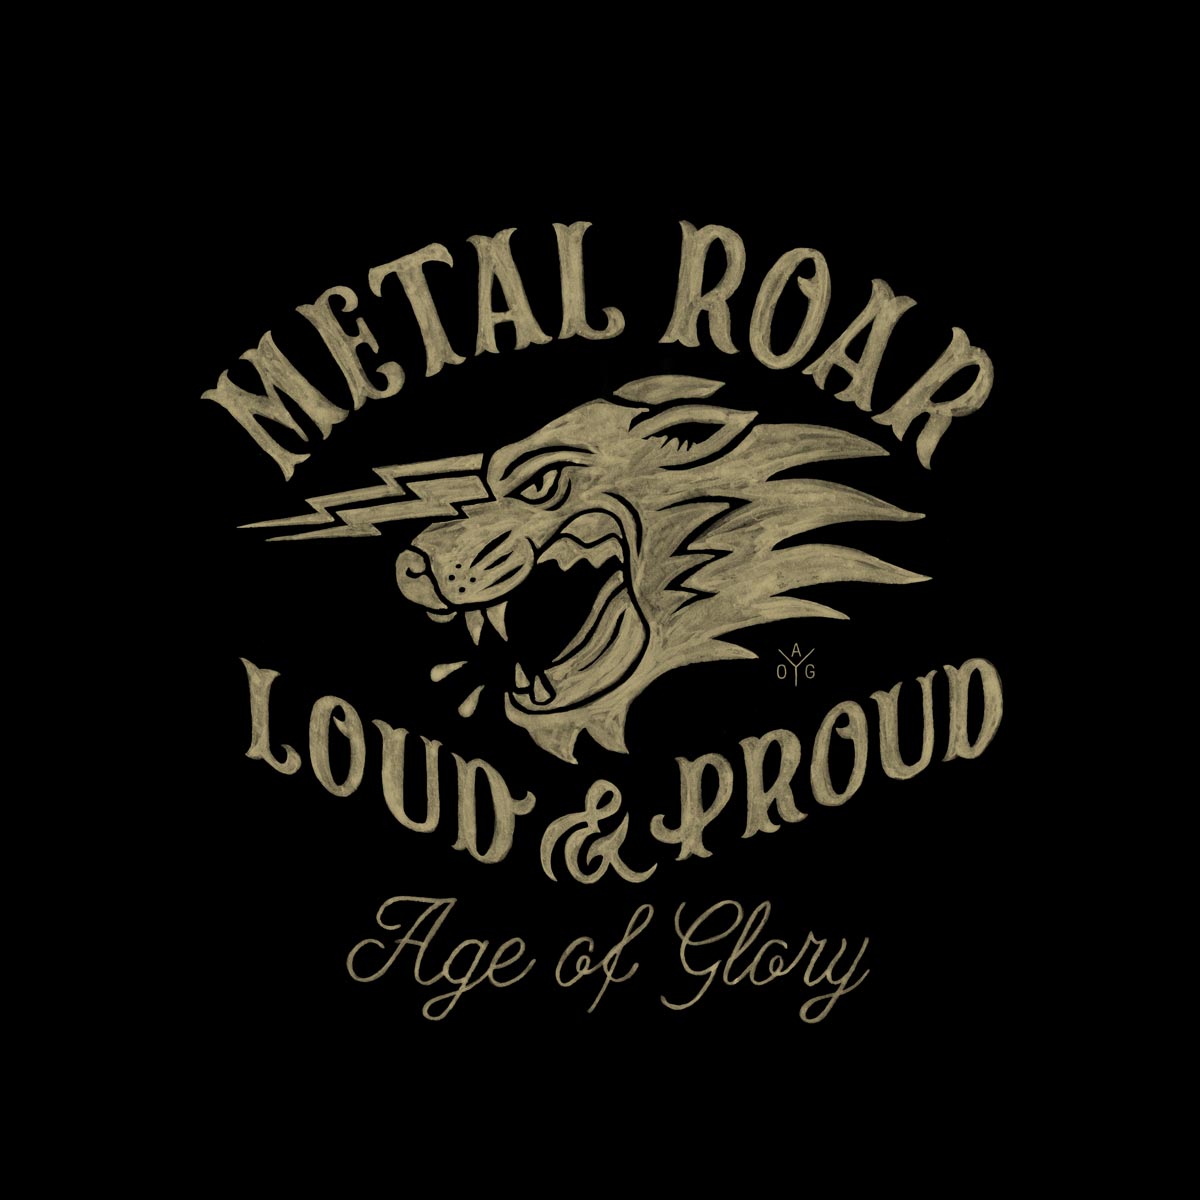 Age of Glory Metal Roar Tee Washed Black